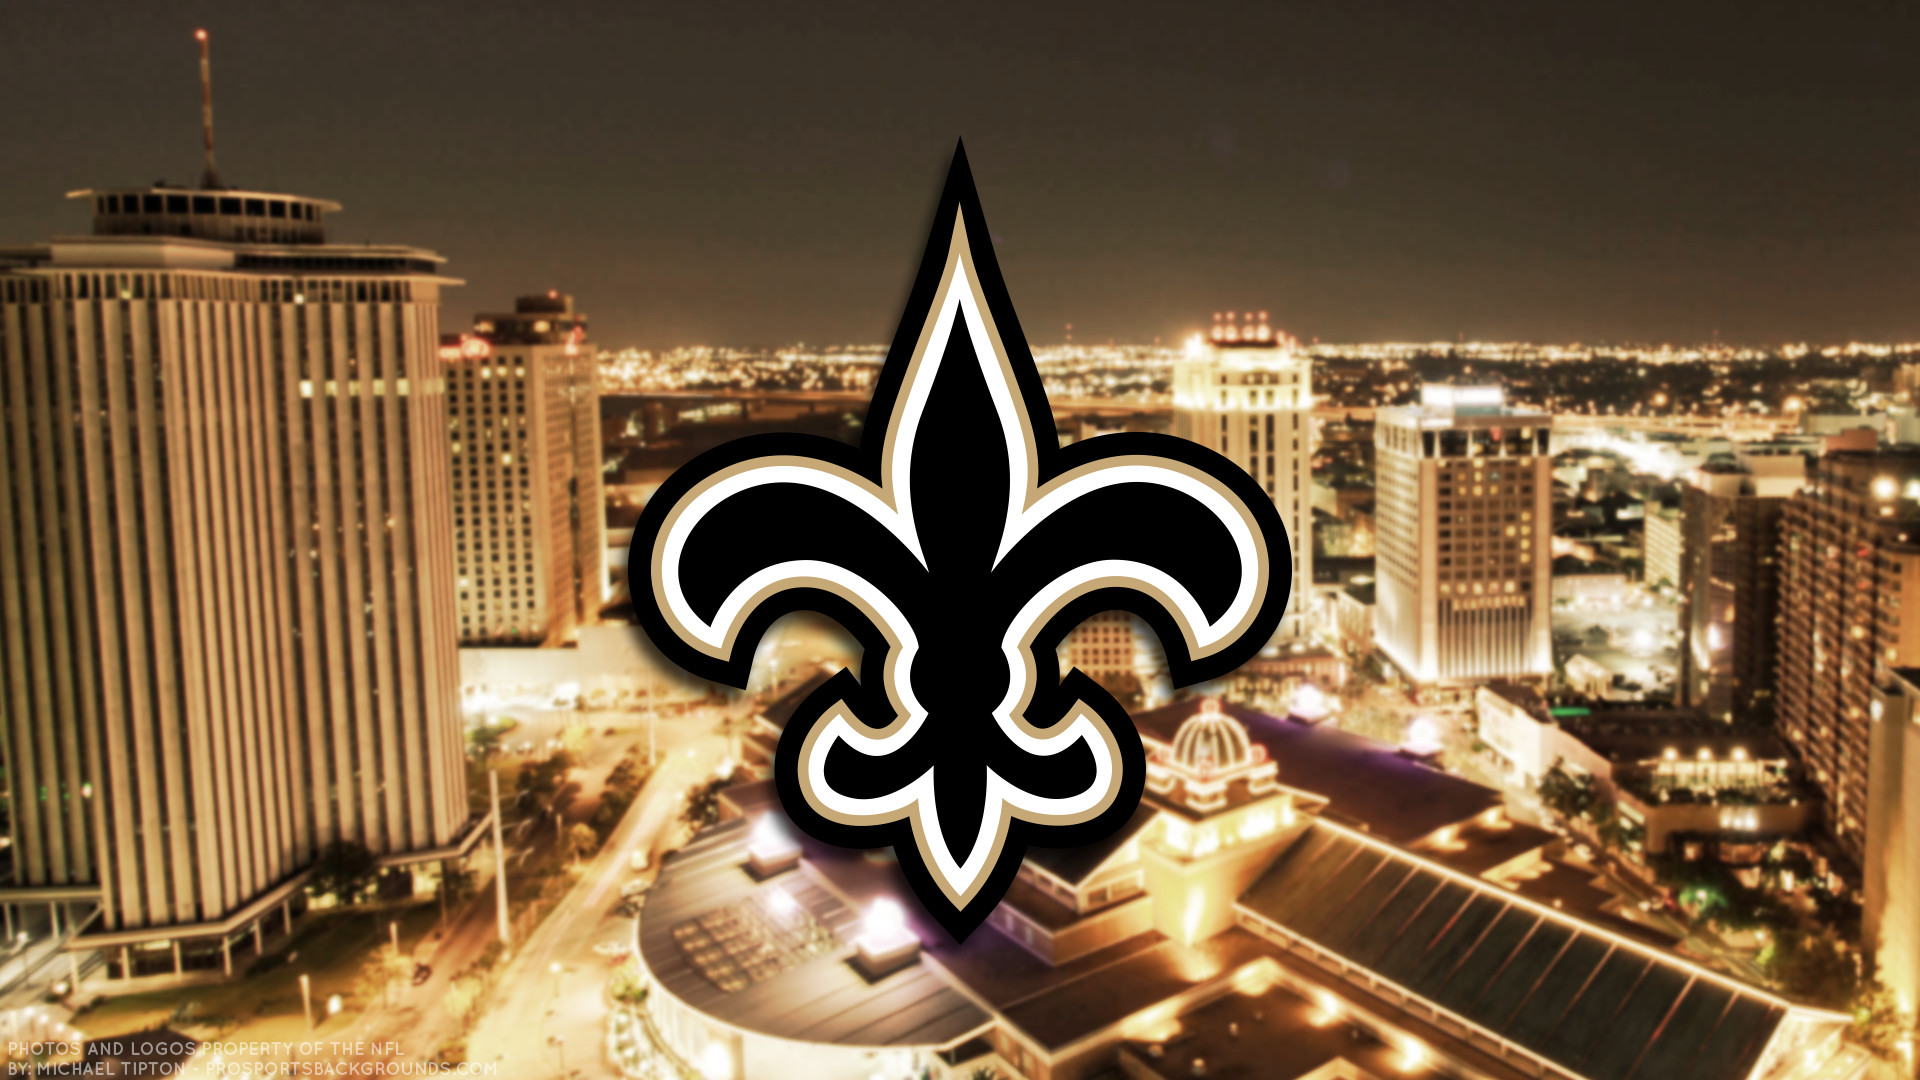 1920x1080 ... New Orleans Saints 2017 football logo wallpaper pc desktop computer